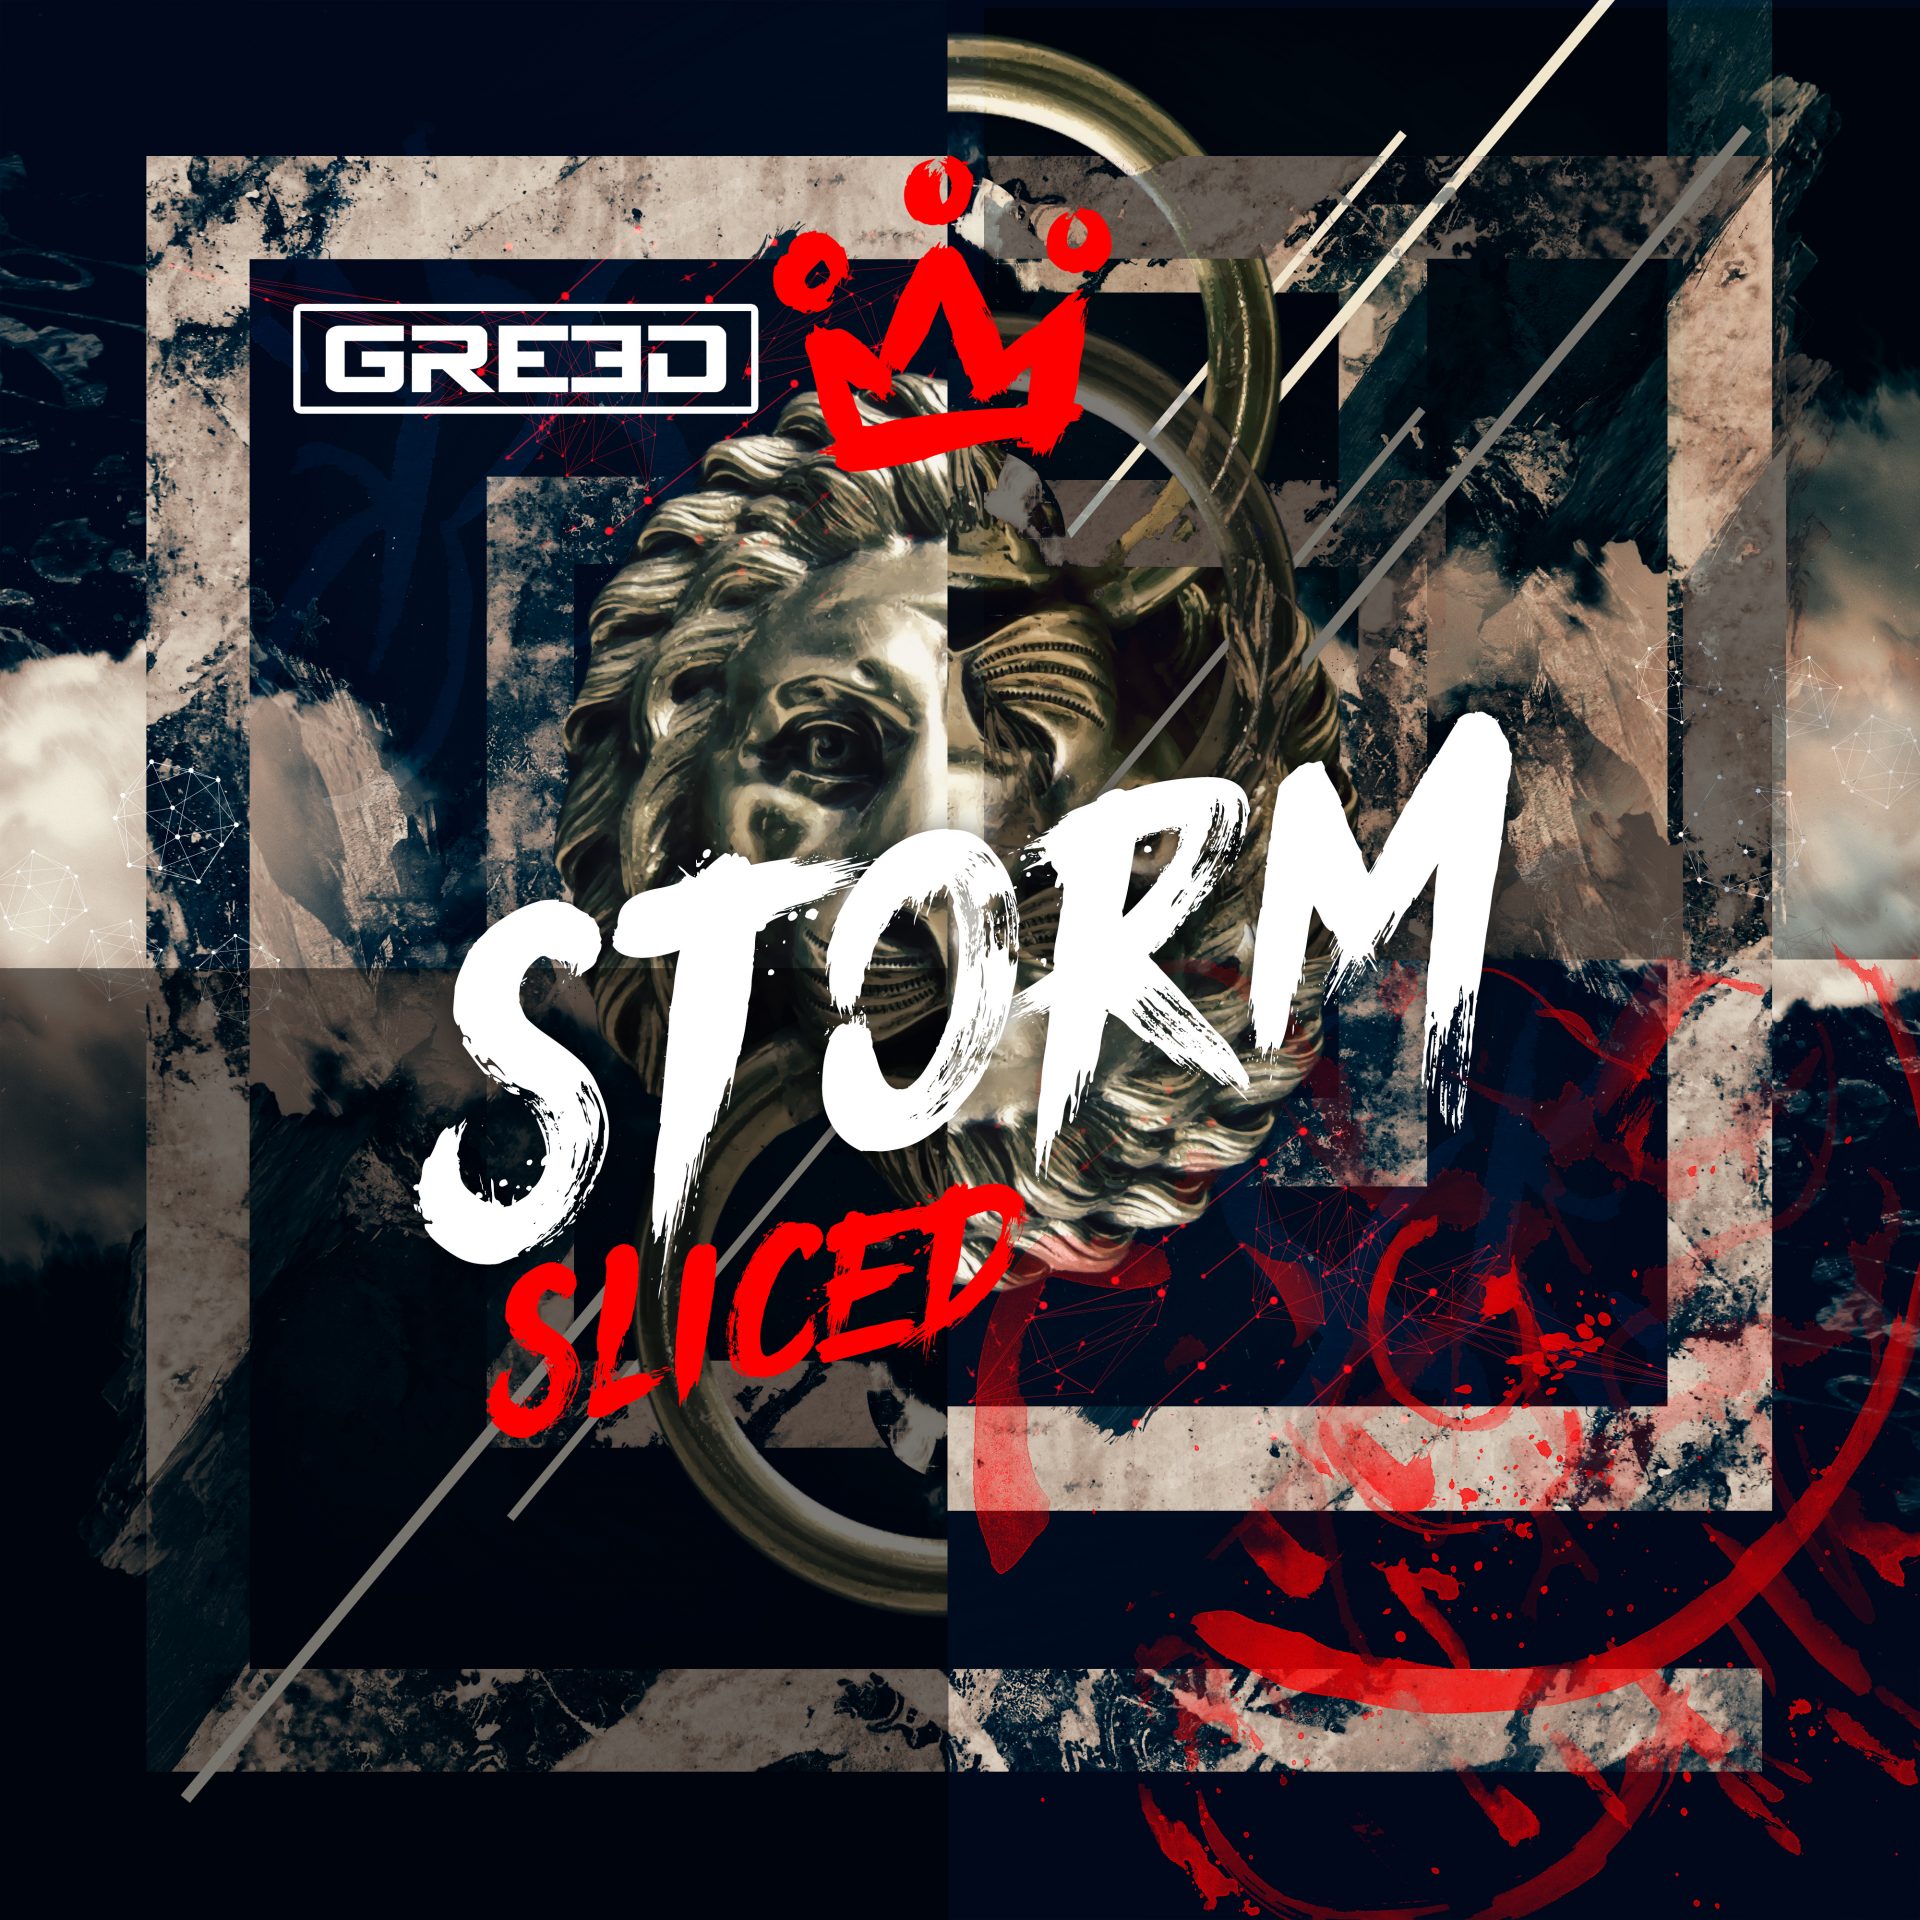 GR33D storm sliced album art cover design